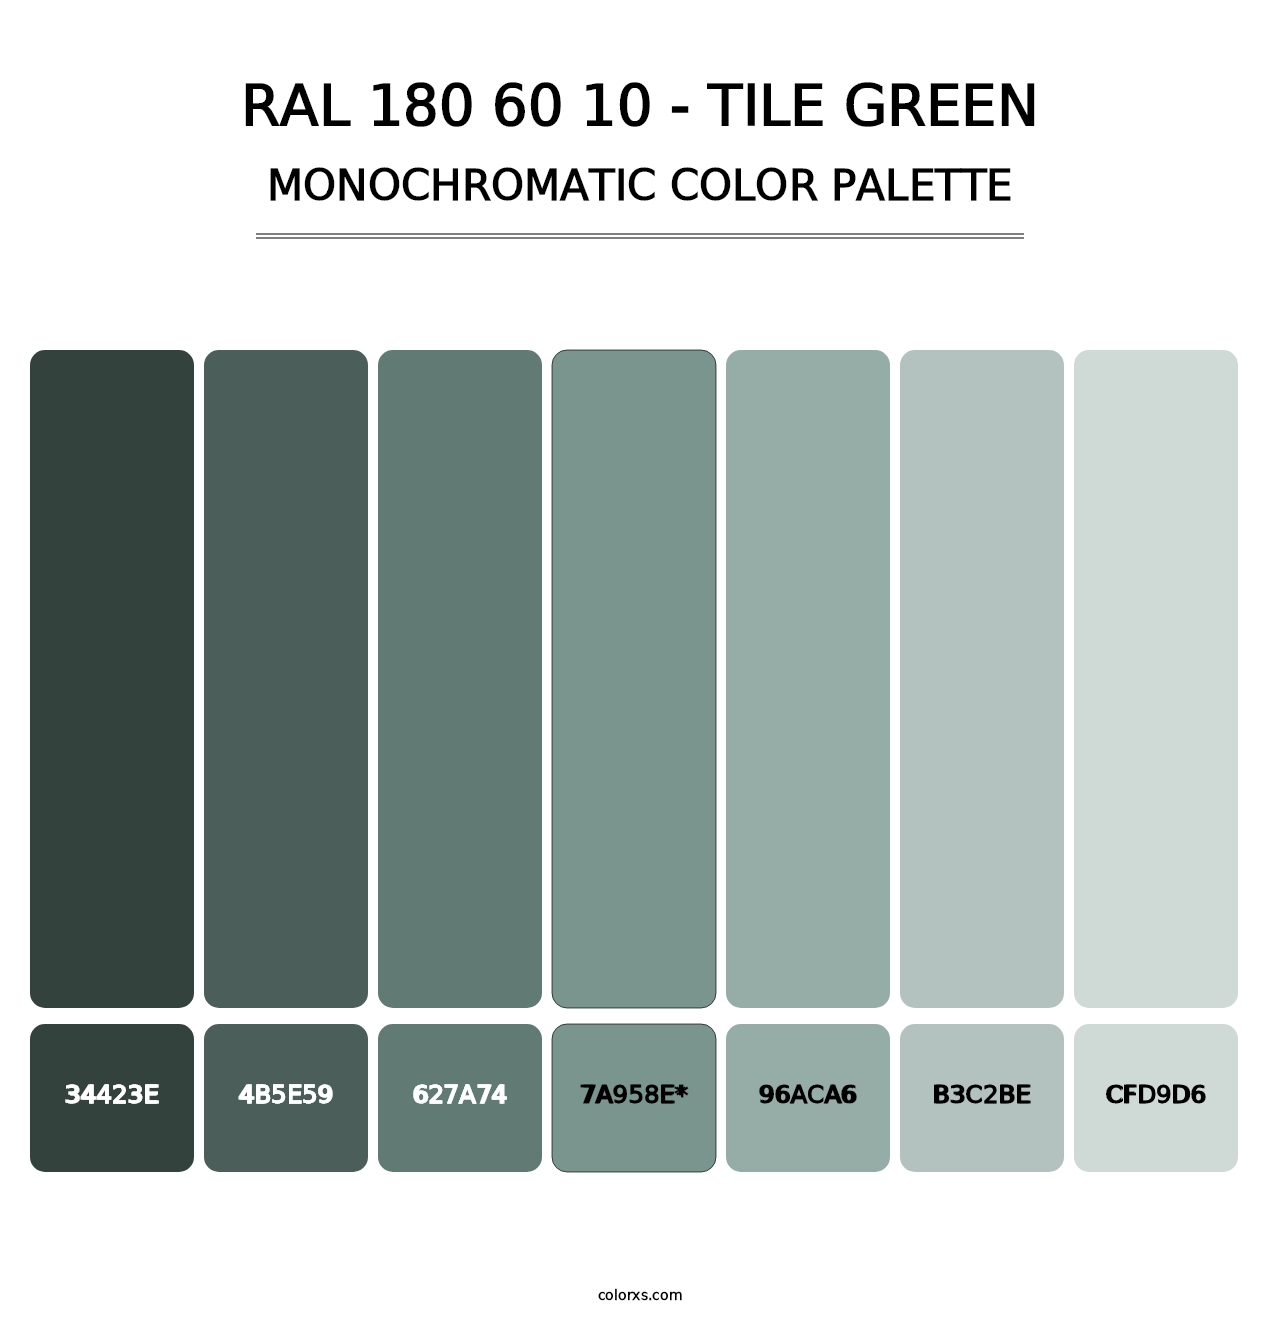 RAL 180 60 10 - Tile Green - Monochromatic Color Palette